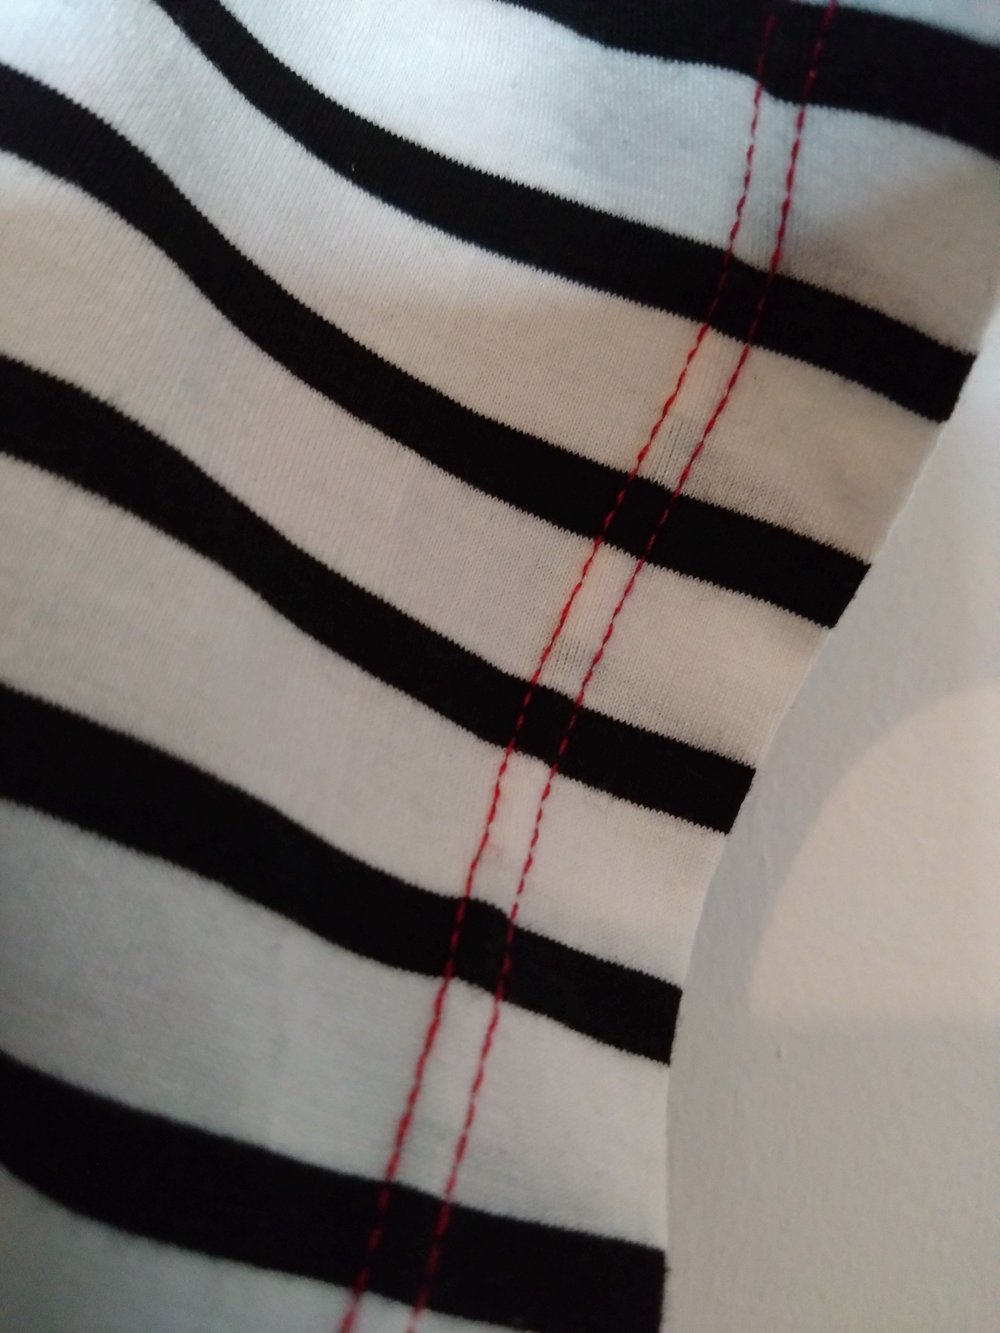 Red twin needle stitch on striped T shirt.JPG